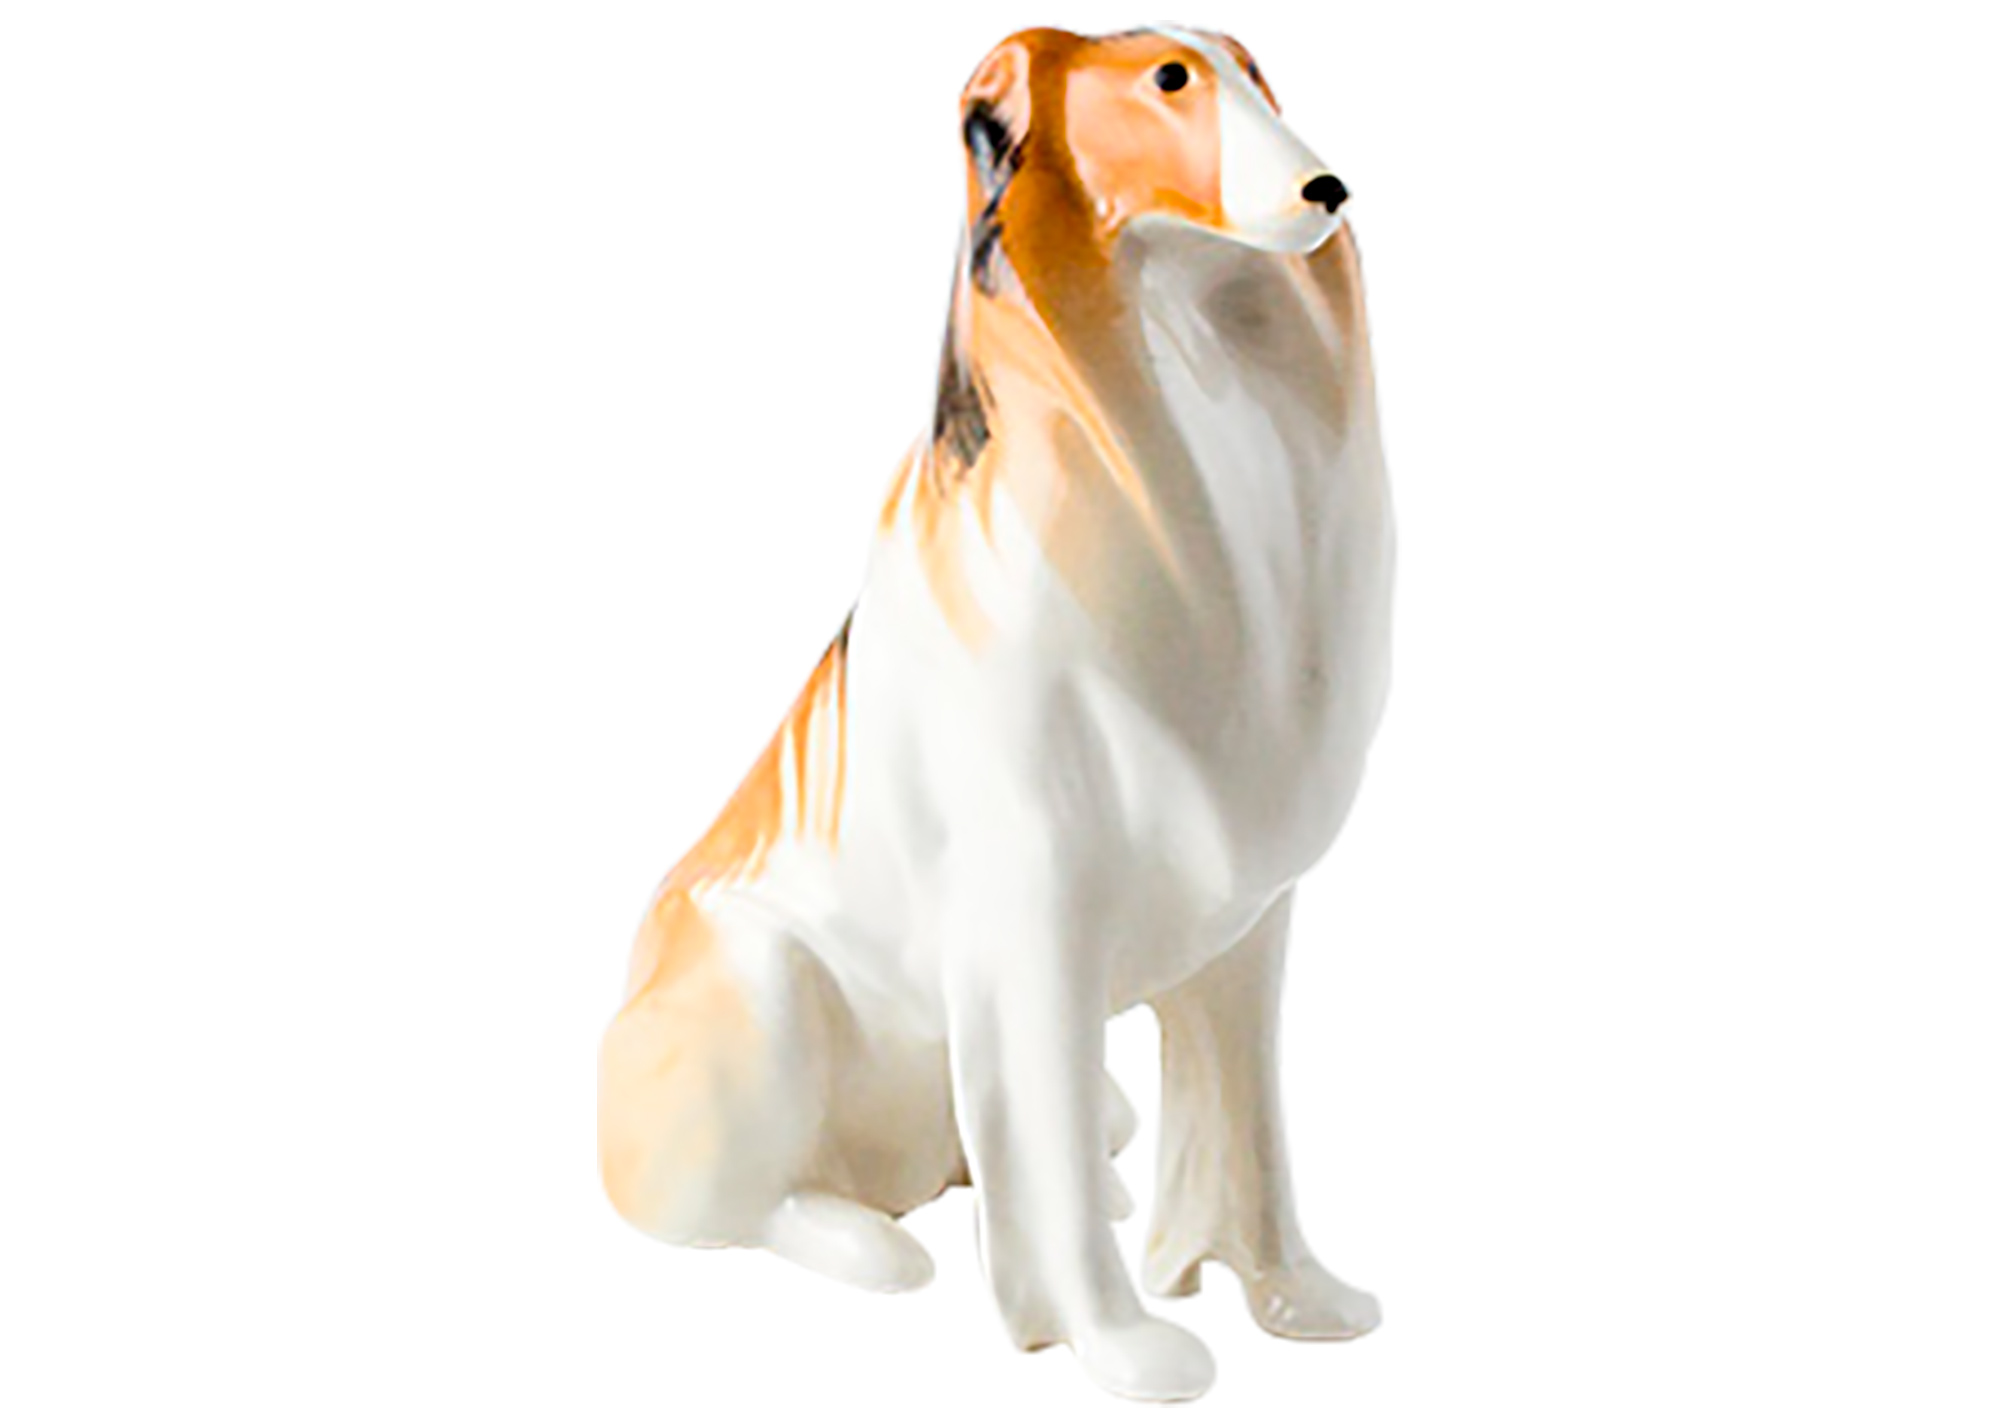 Buy Collie Dog Figurine at GoldenCockerel.com